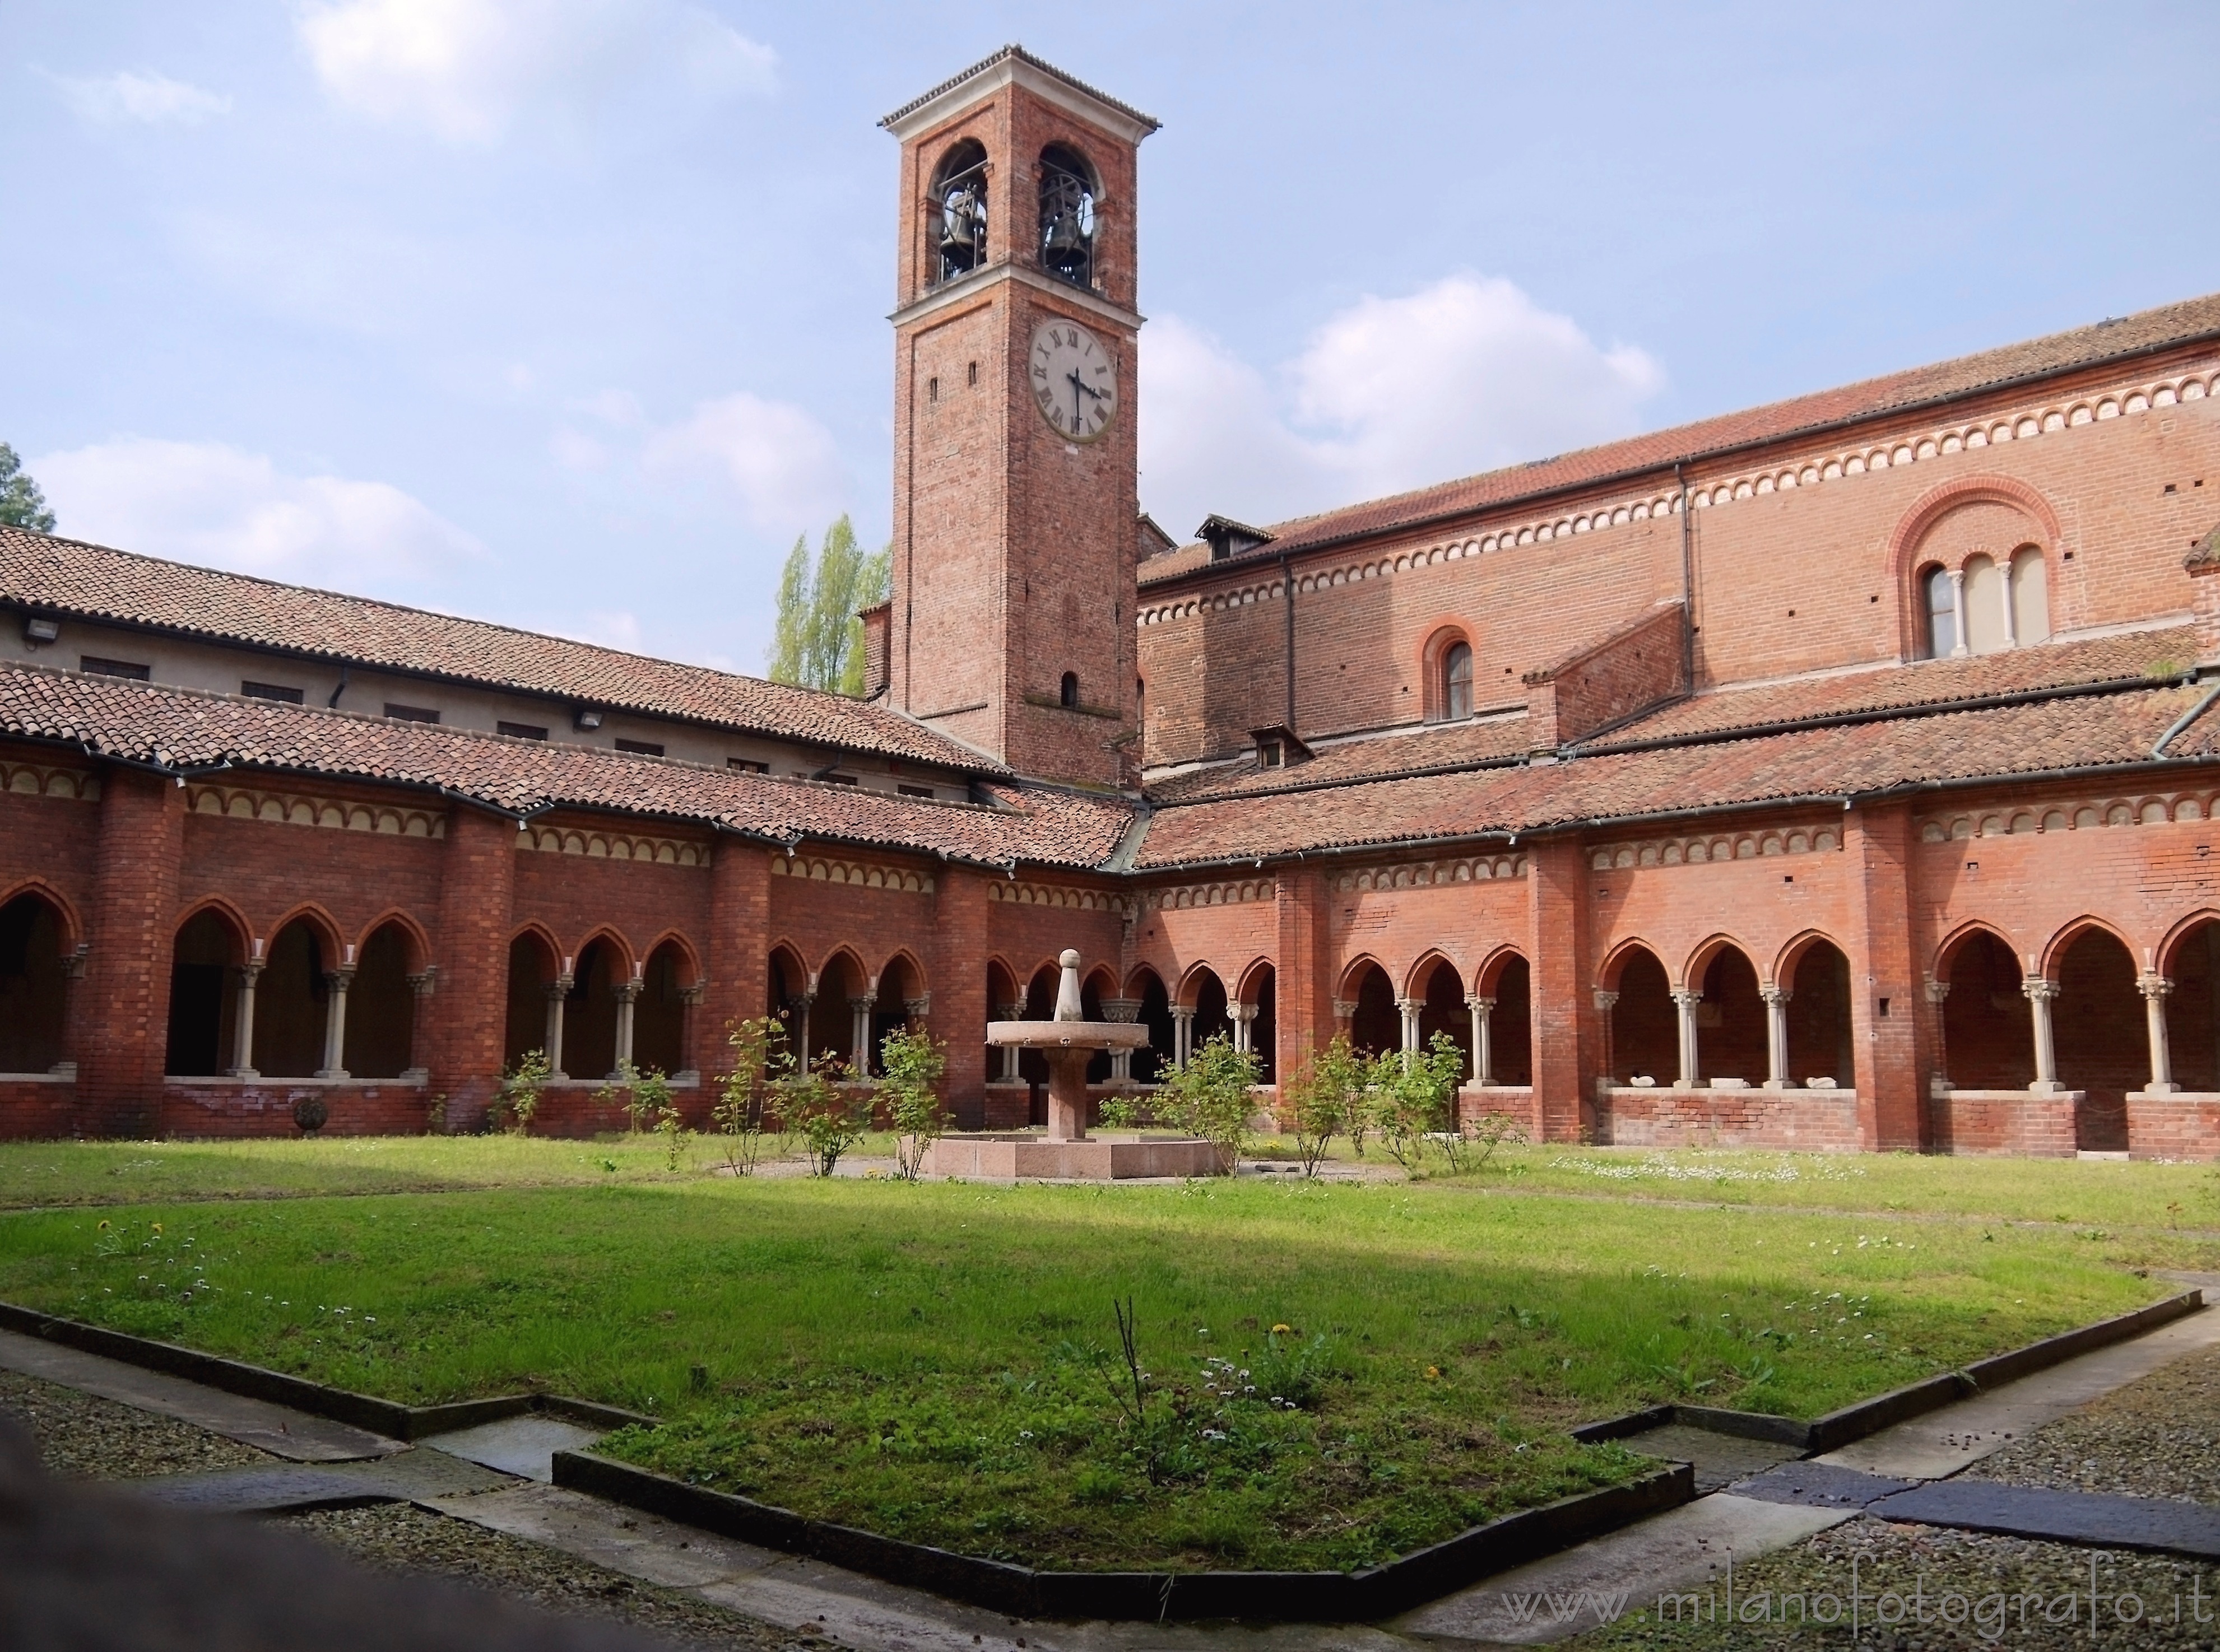 Milan (Italy): Court of the Abbey of Chiaravalle - Milan (Italy)